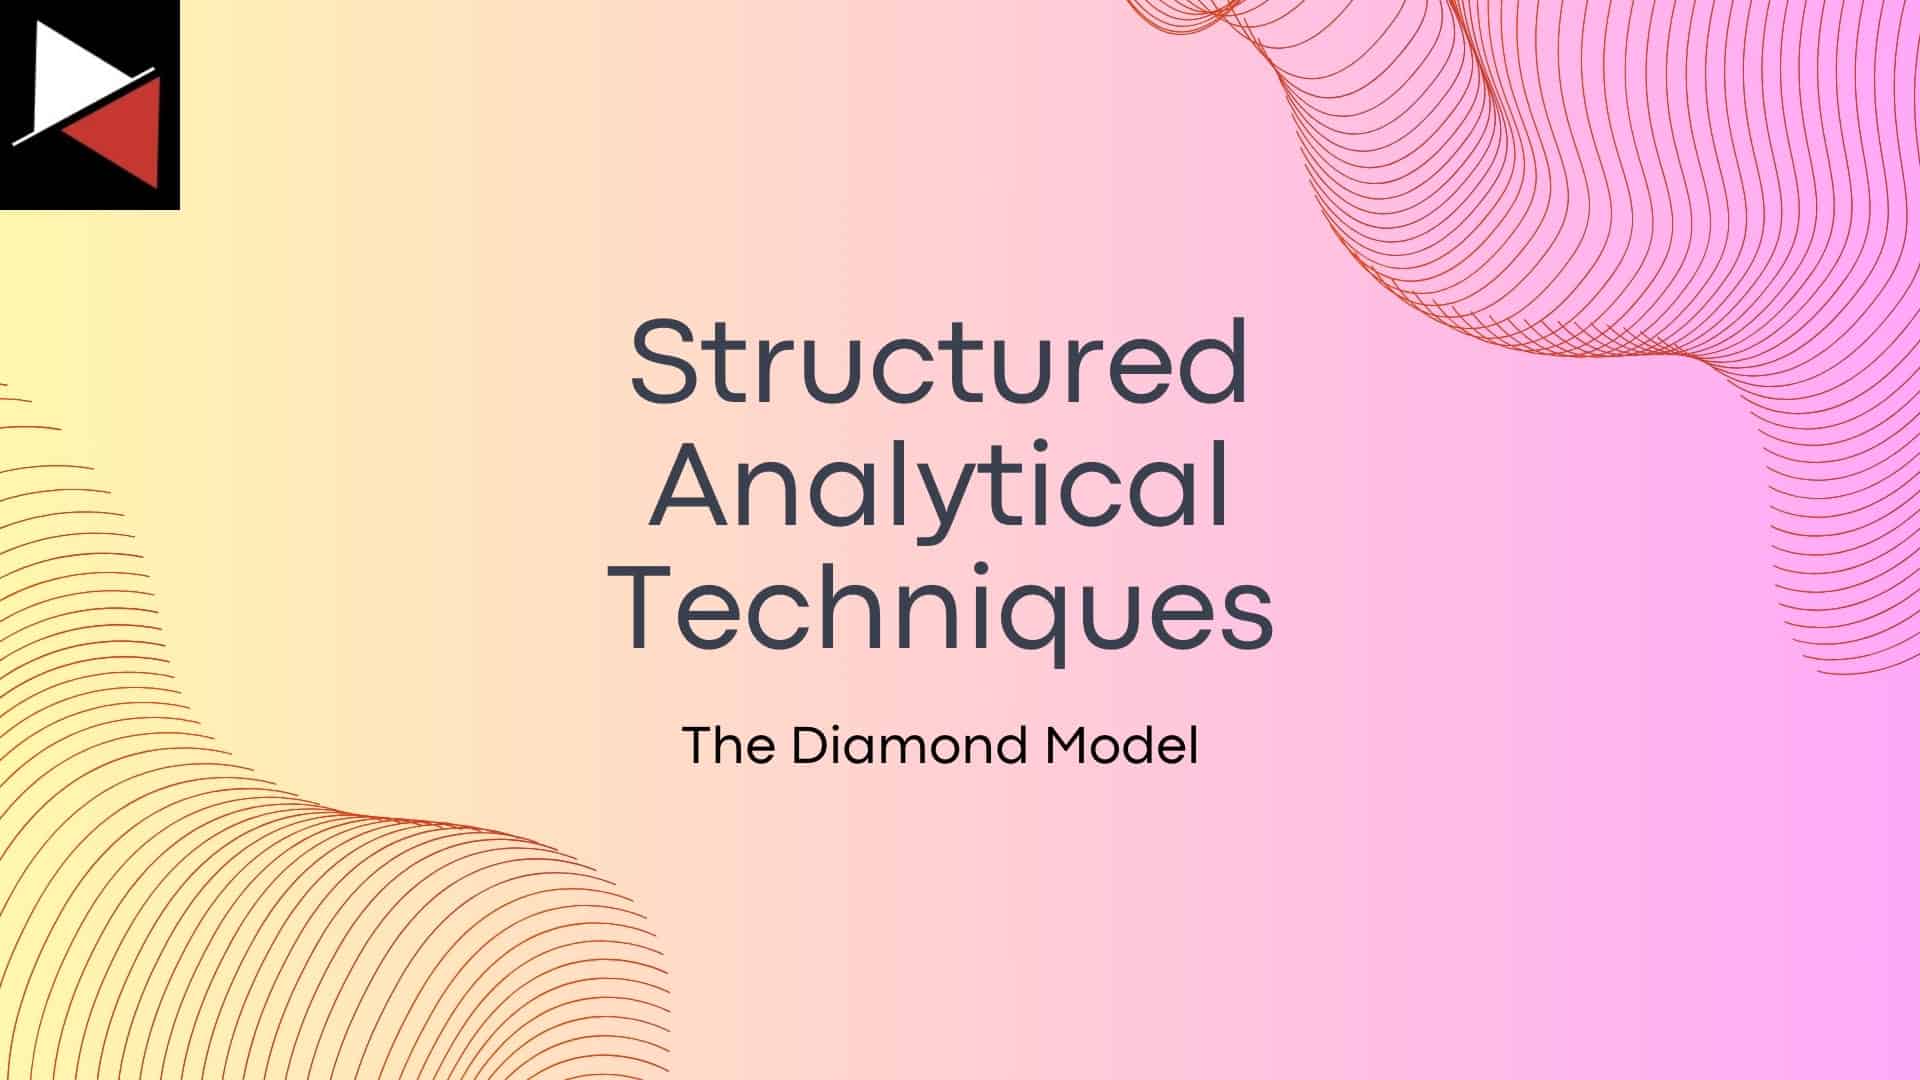 The Diamond Model: Simple Intelligence-Driven Intrusion Analysis